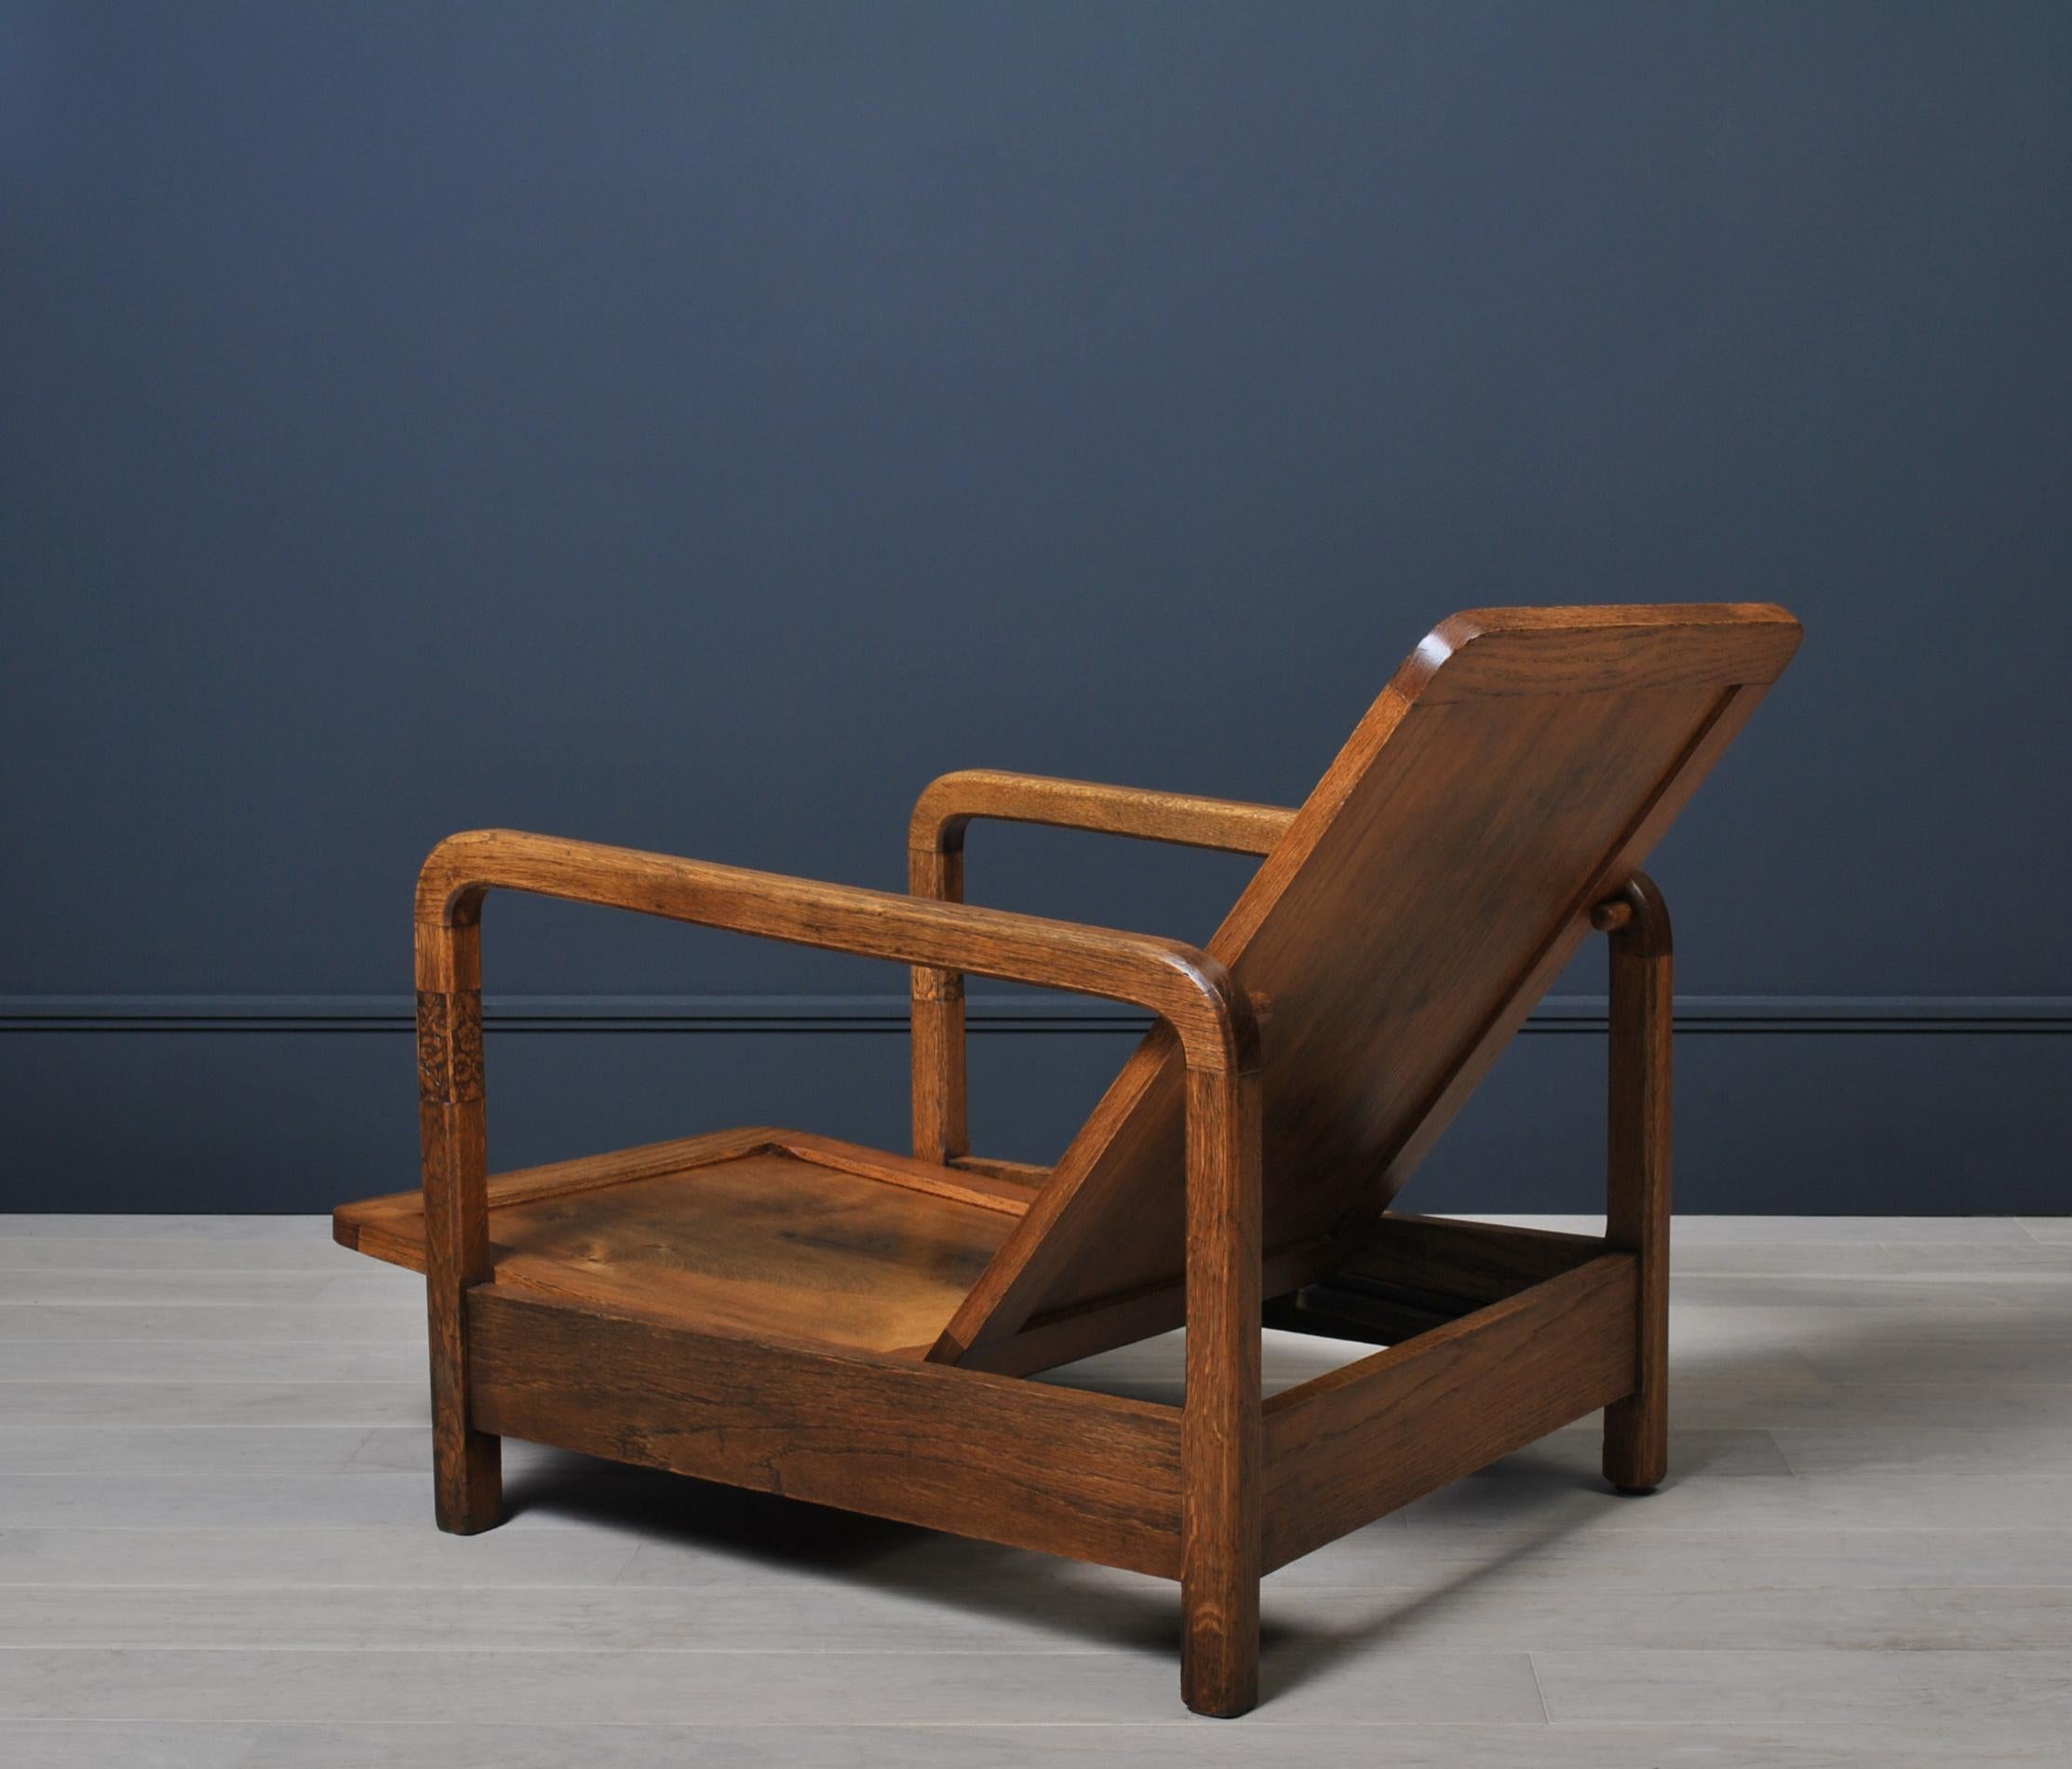 20th Century Art Deco Modernist Chair